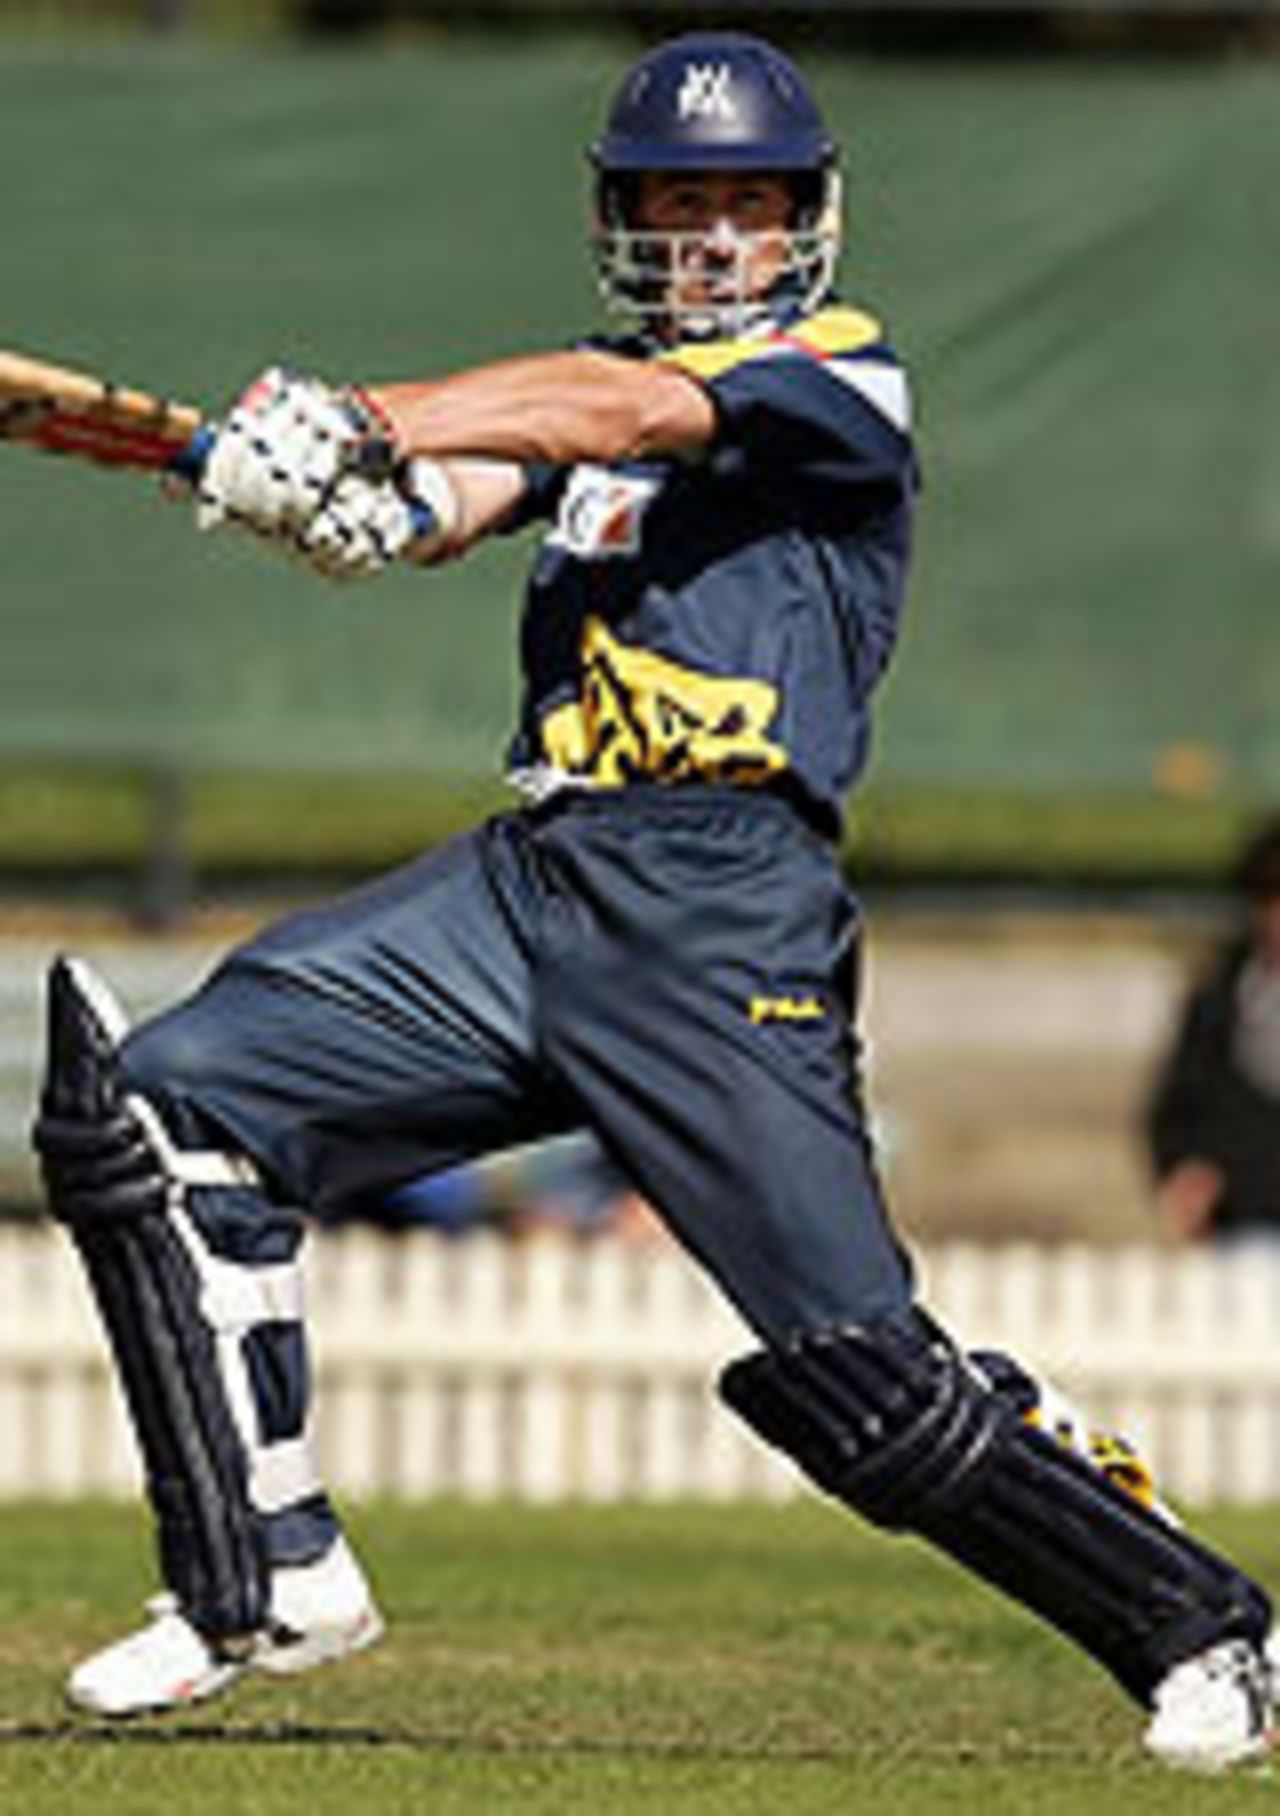 Matthew Elliott plays a stroke, Victoria v Western Australia, ING Cup, Melbourne, November 14th, 2004